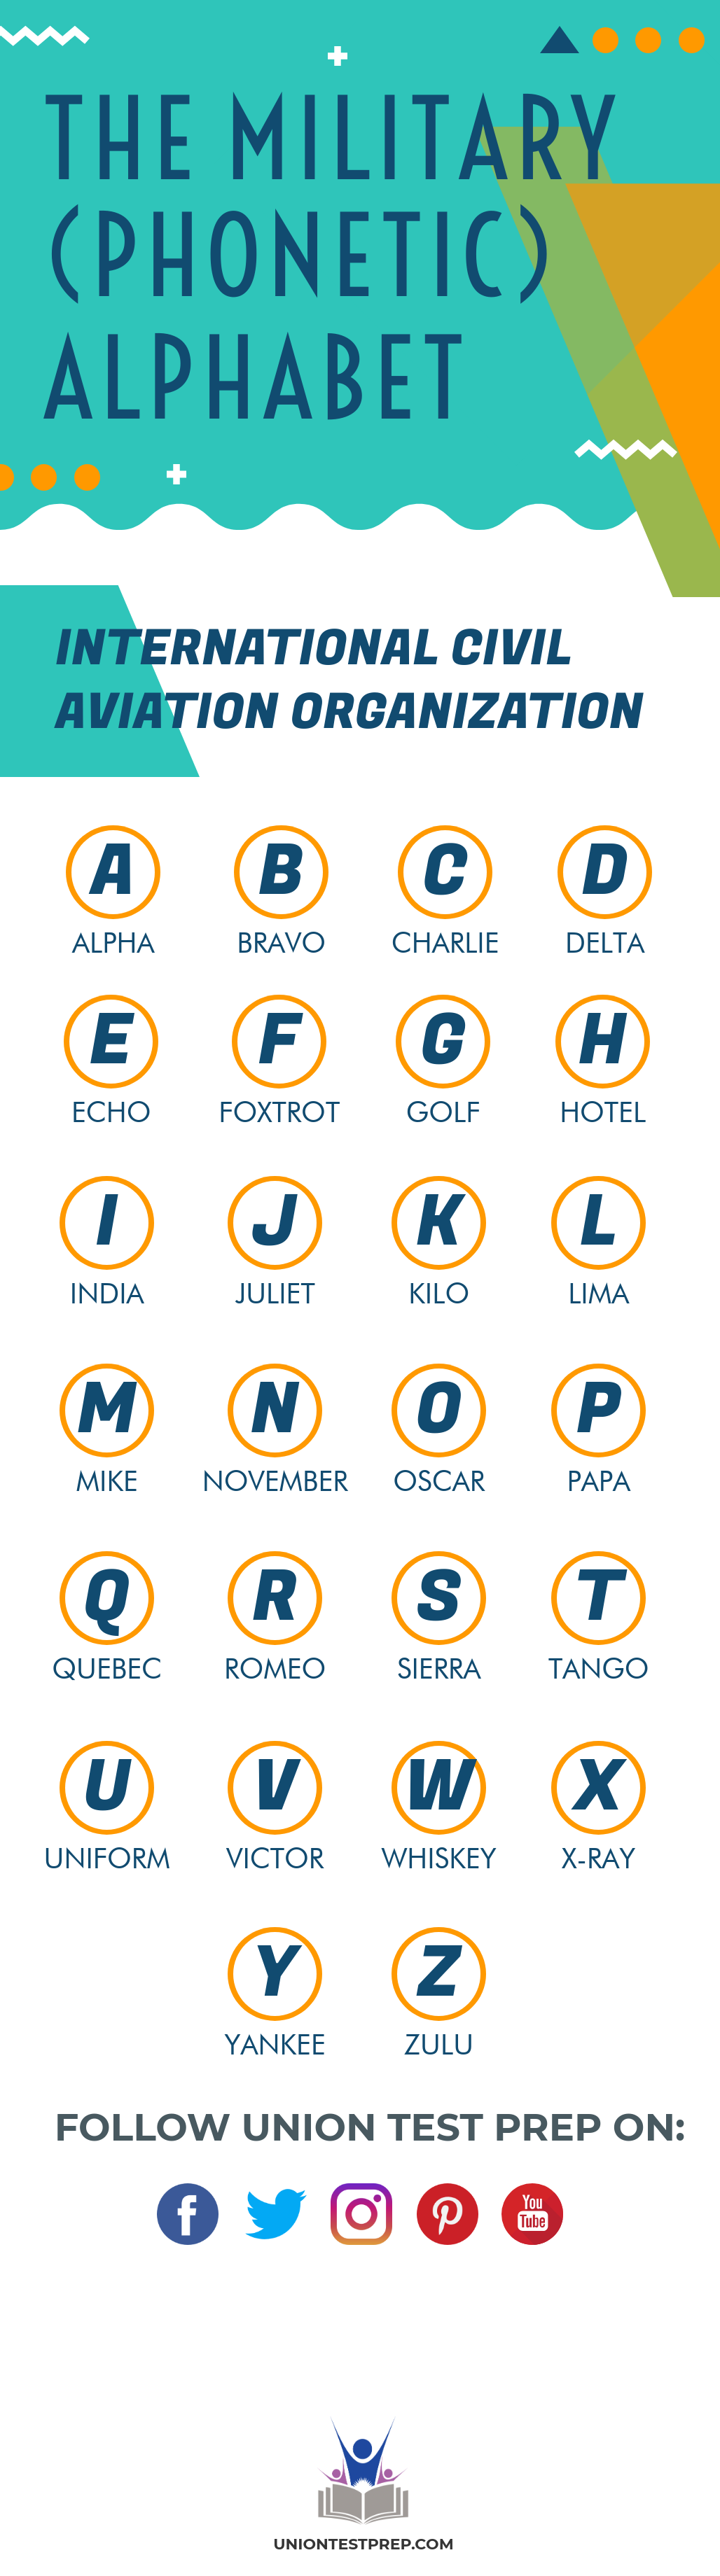 The Military phonetic alphabet